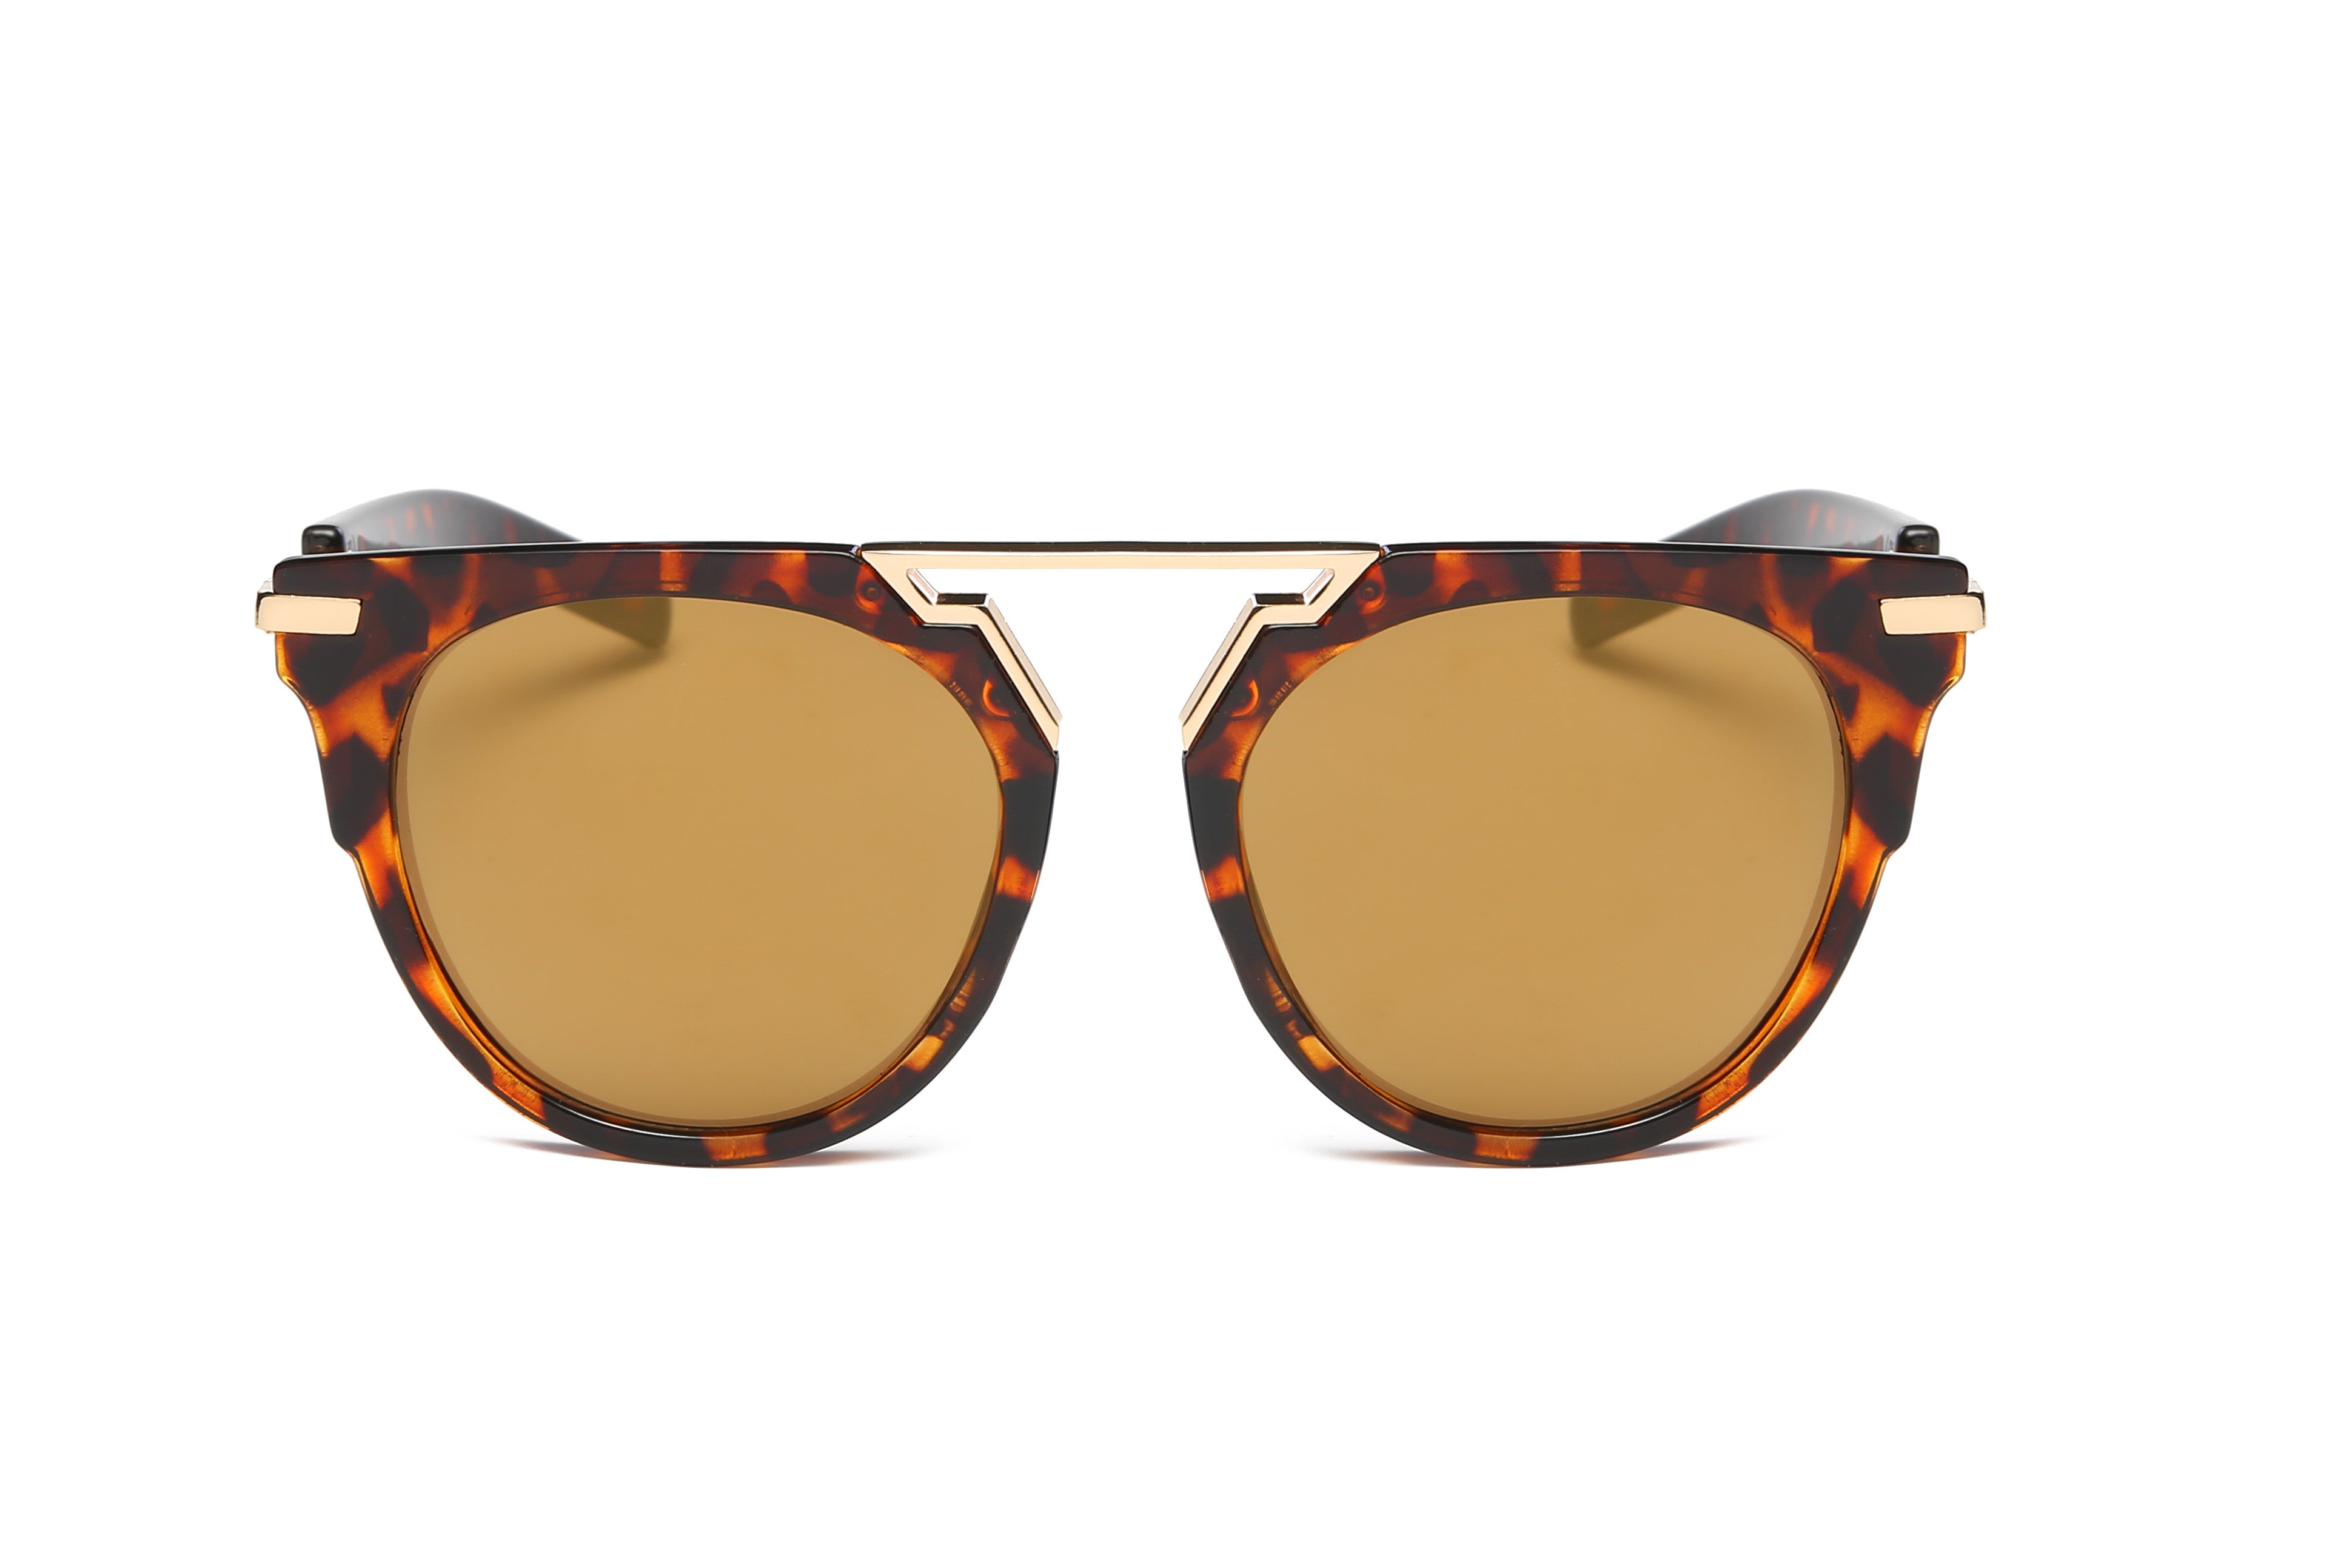 S2004 - Classic Retro Fashion Brow-Bar Round Sunglasses Assorted/Mixed